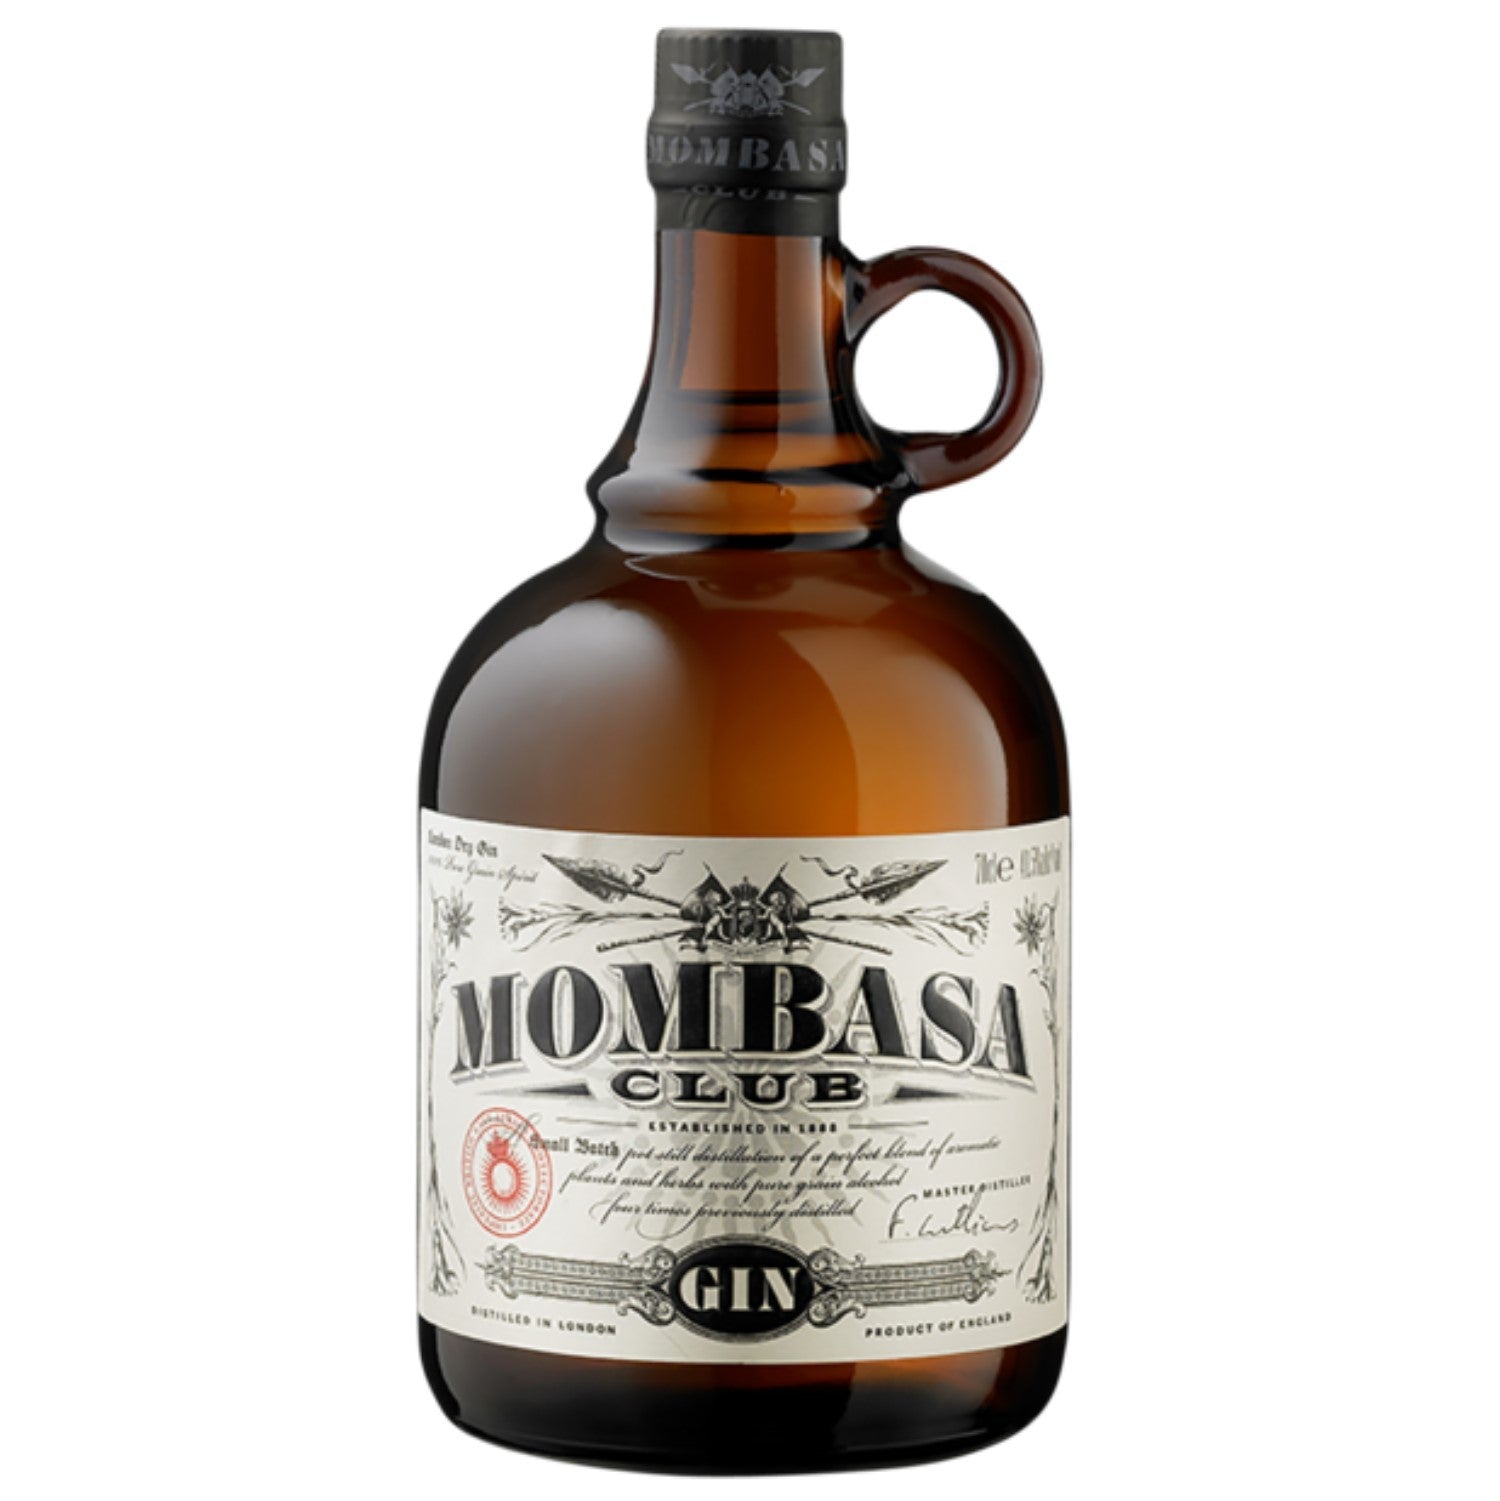 Mombasa Club London Dry Premium Gin (6 x 0.7l) - Versanel -